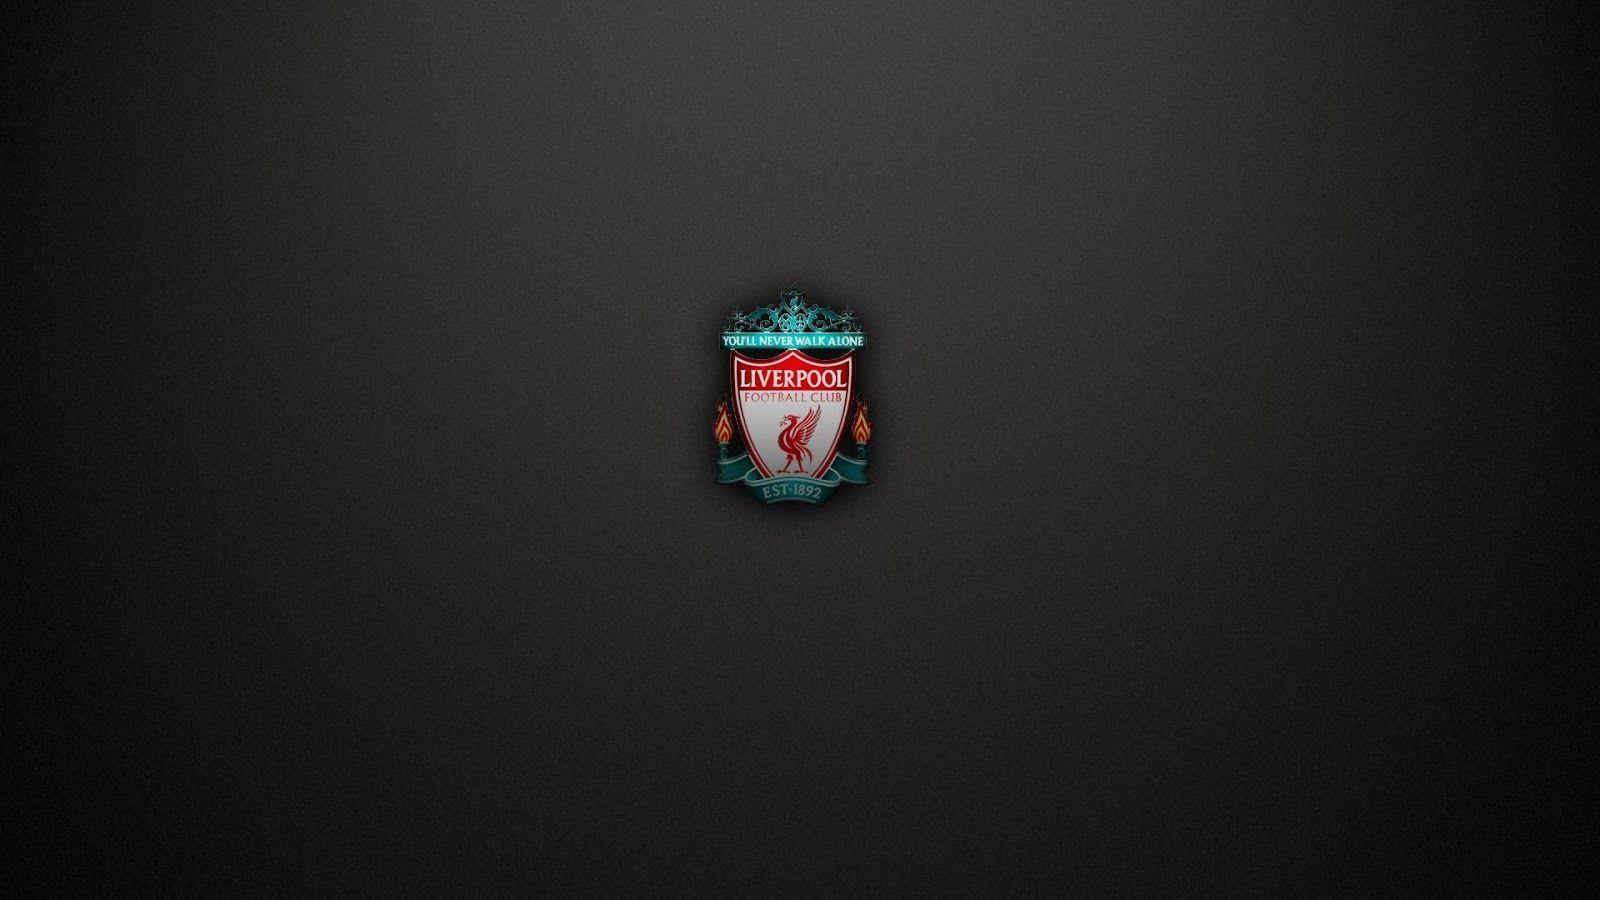 Liverpool Football Club Wallpaper. Football Wallpaper HD